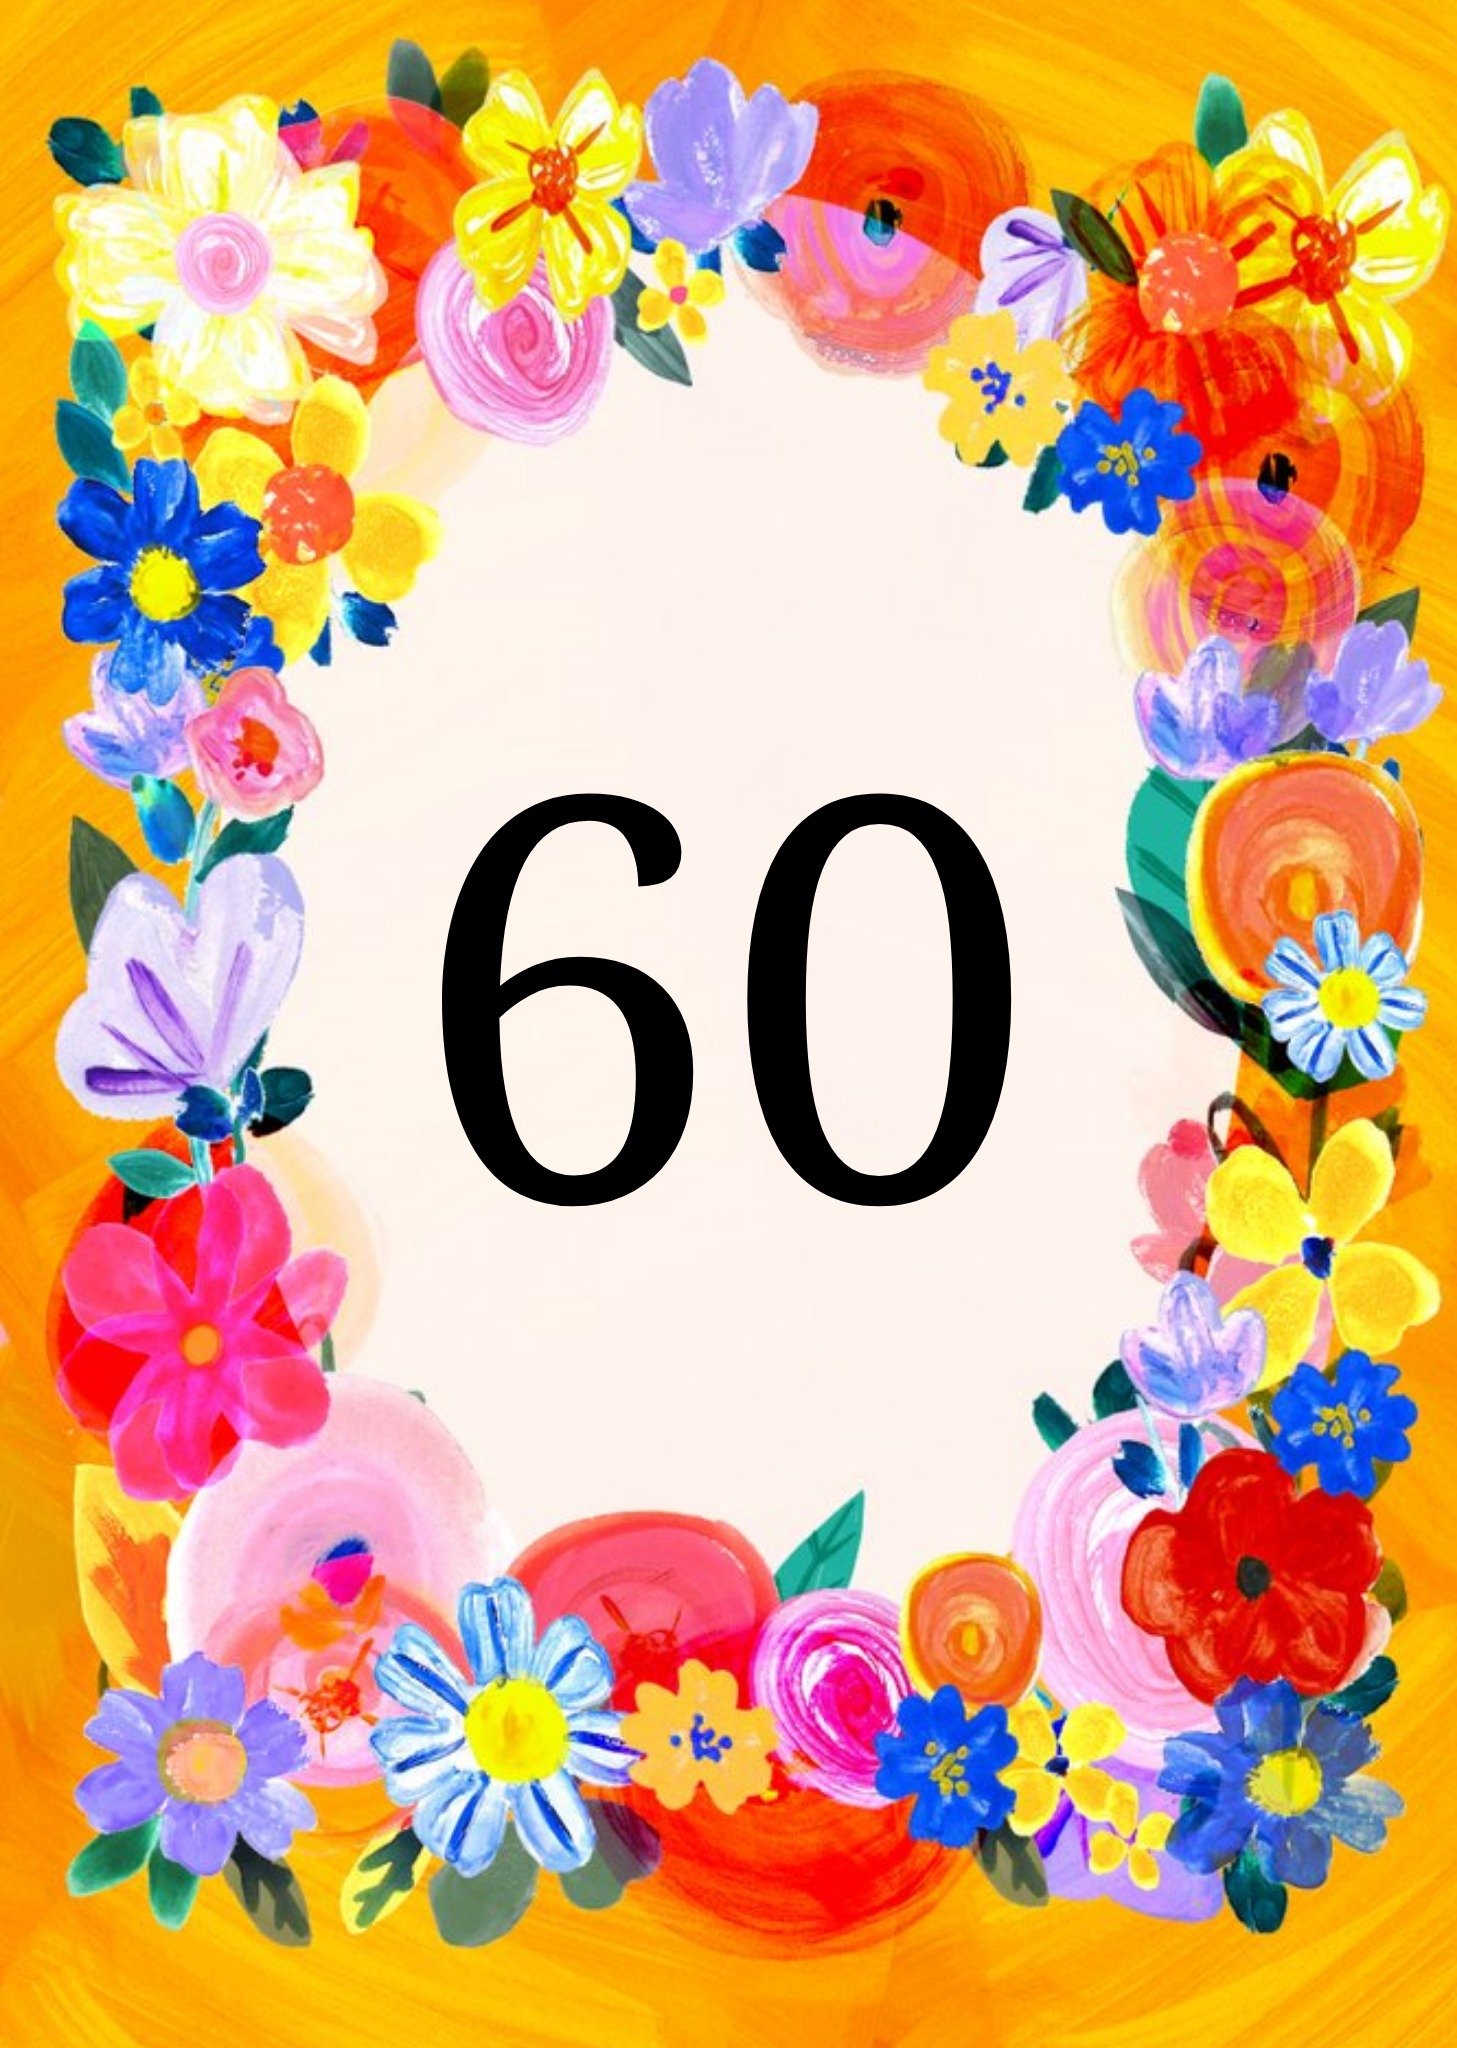 Moonpig Katt Jones Illustration Colourful Floral 60th Birthday Card Ecard